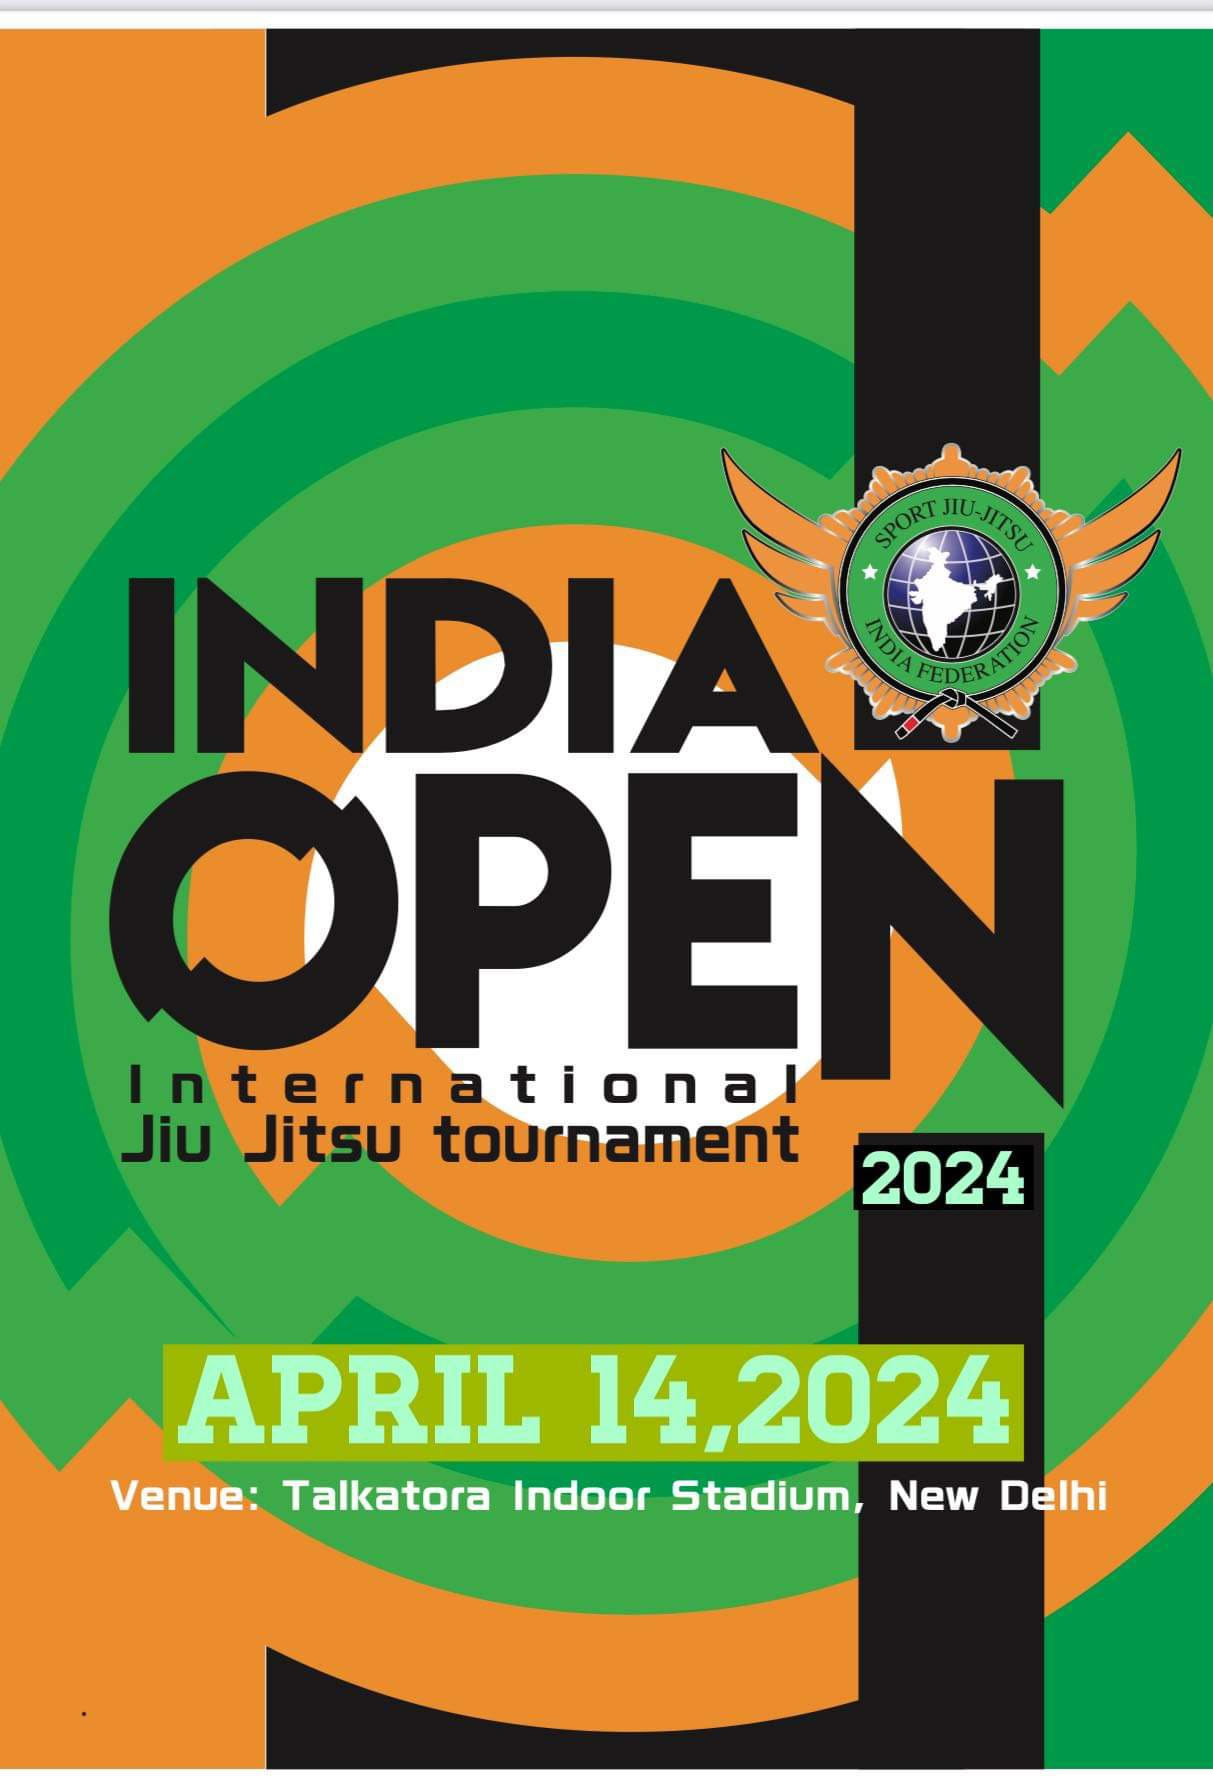 sjjindf india international open jiu jitsu tournament 2024 (GI)